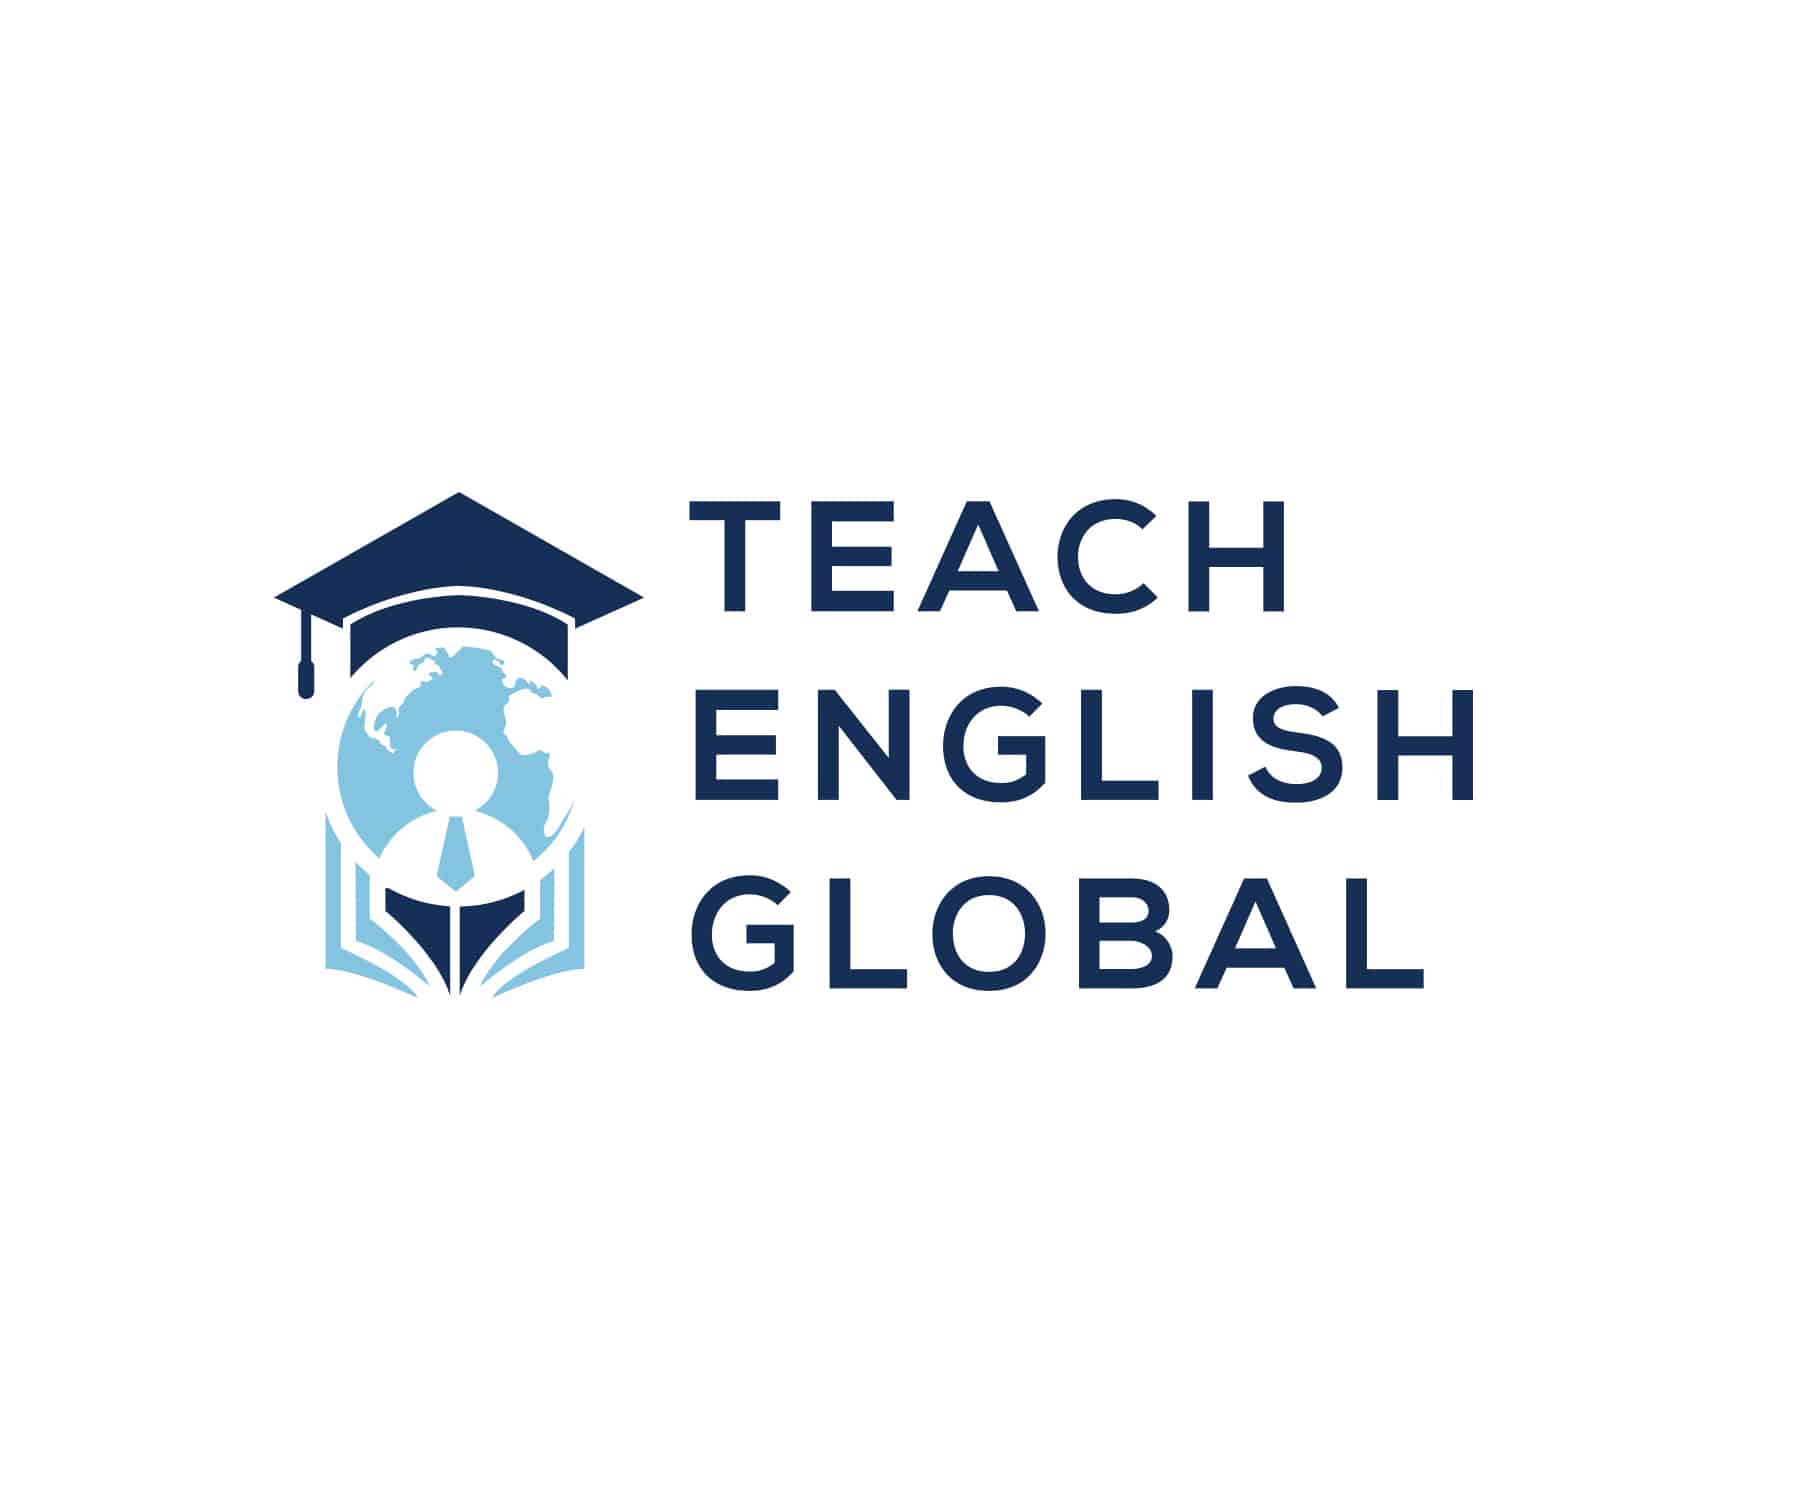 English Teaching positions across China